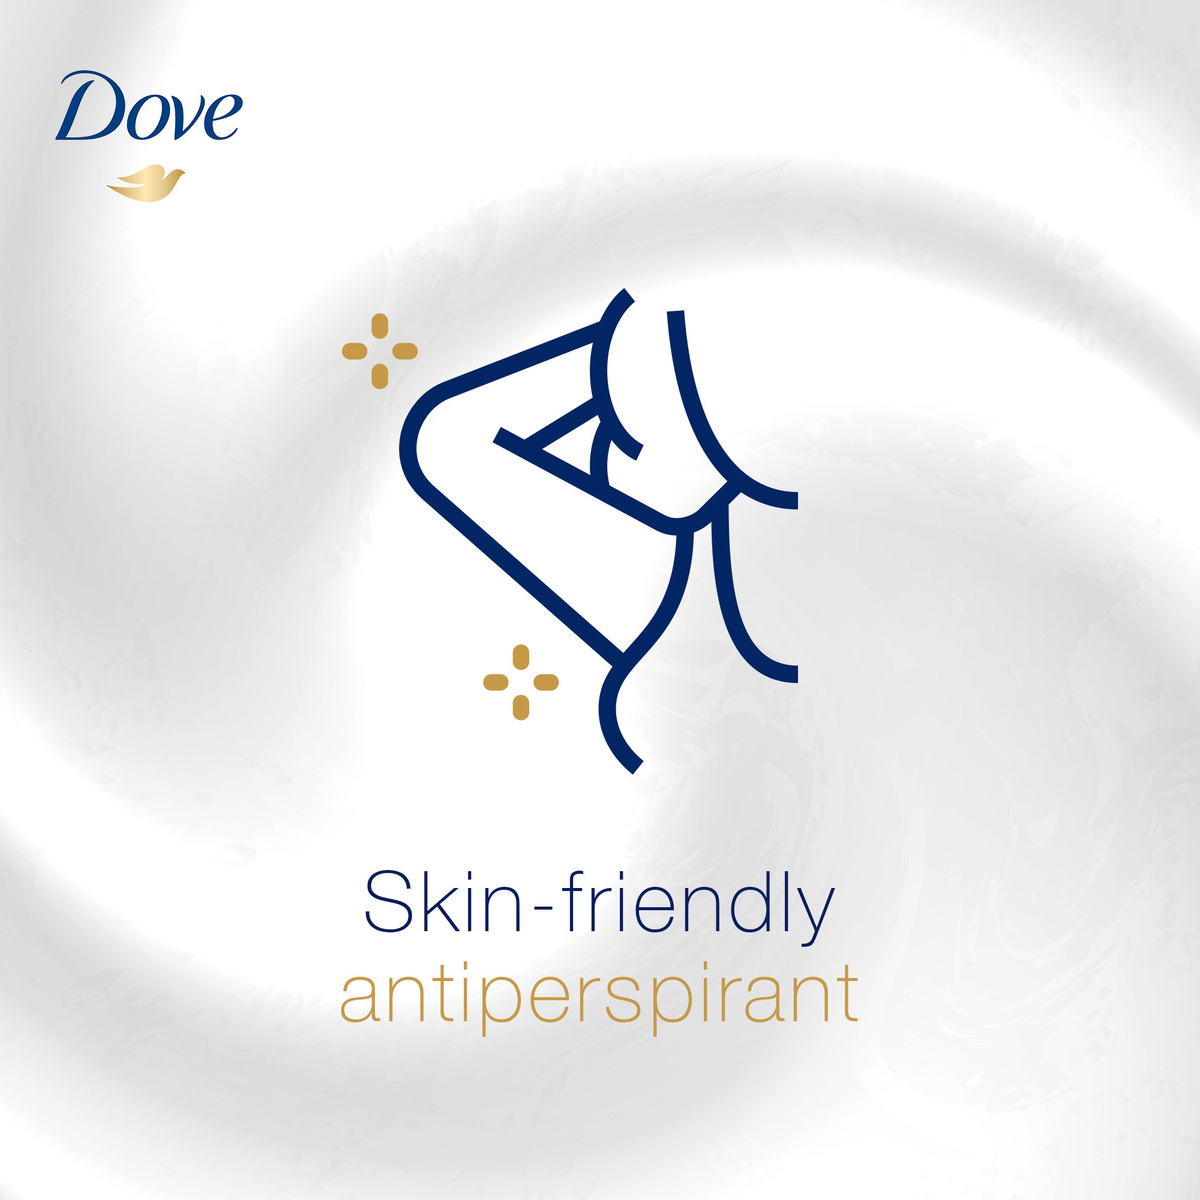 Dove Women Antiperspirant Deodorant Spray Powder Soft Alcohol Free 150 ml